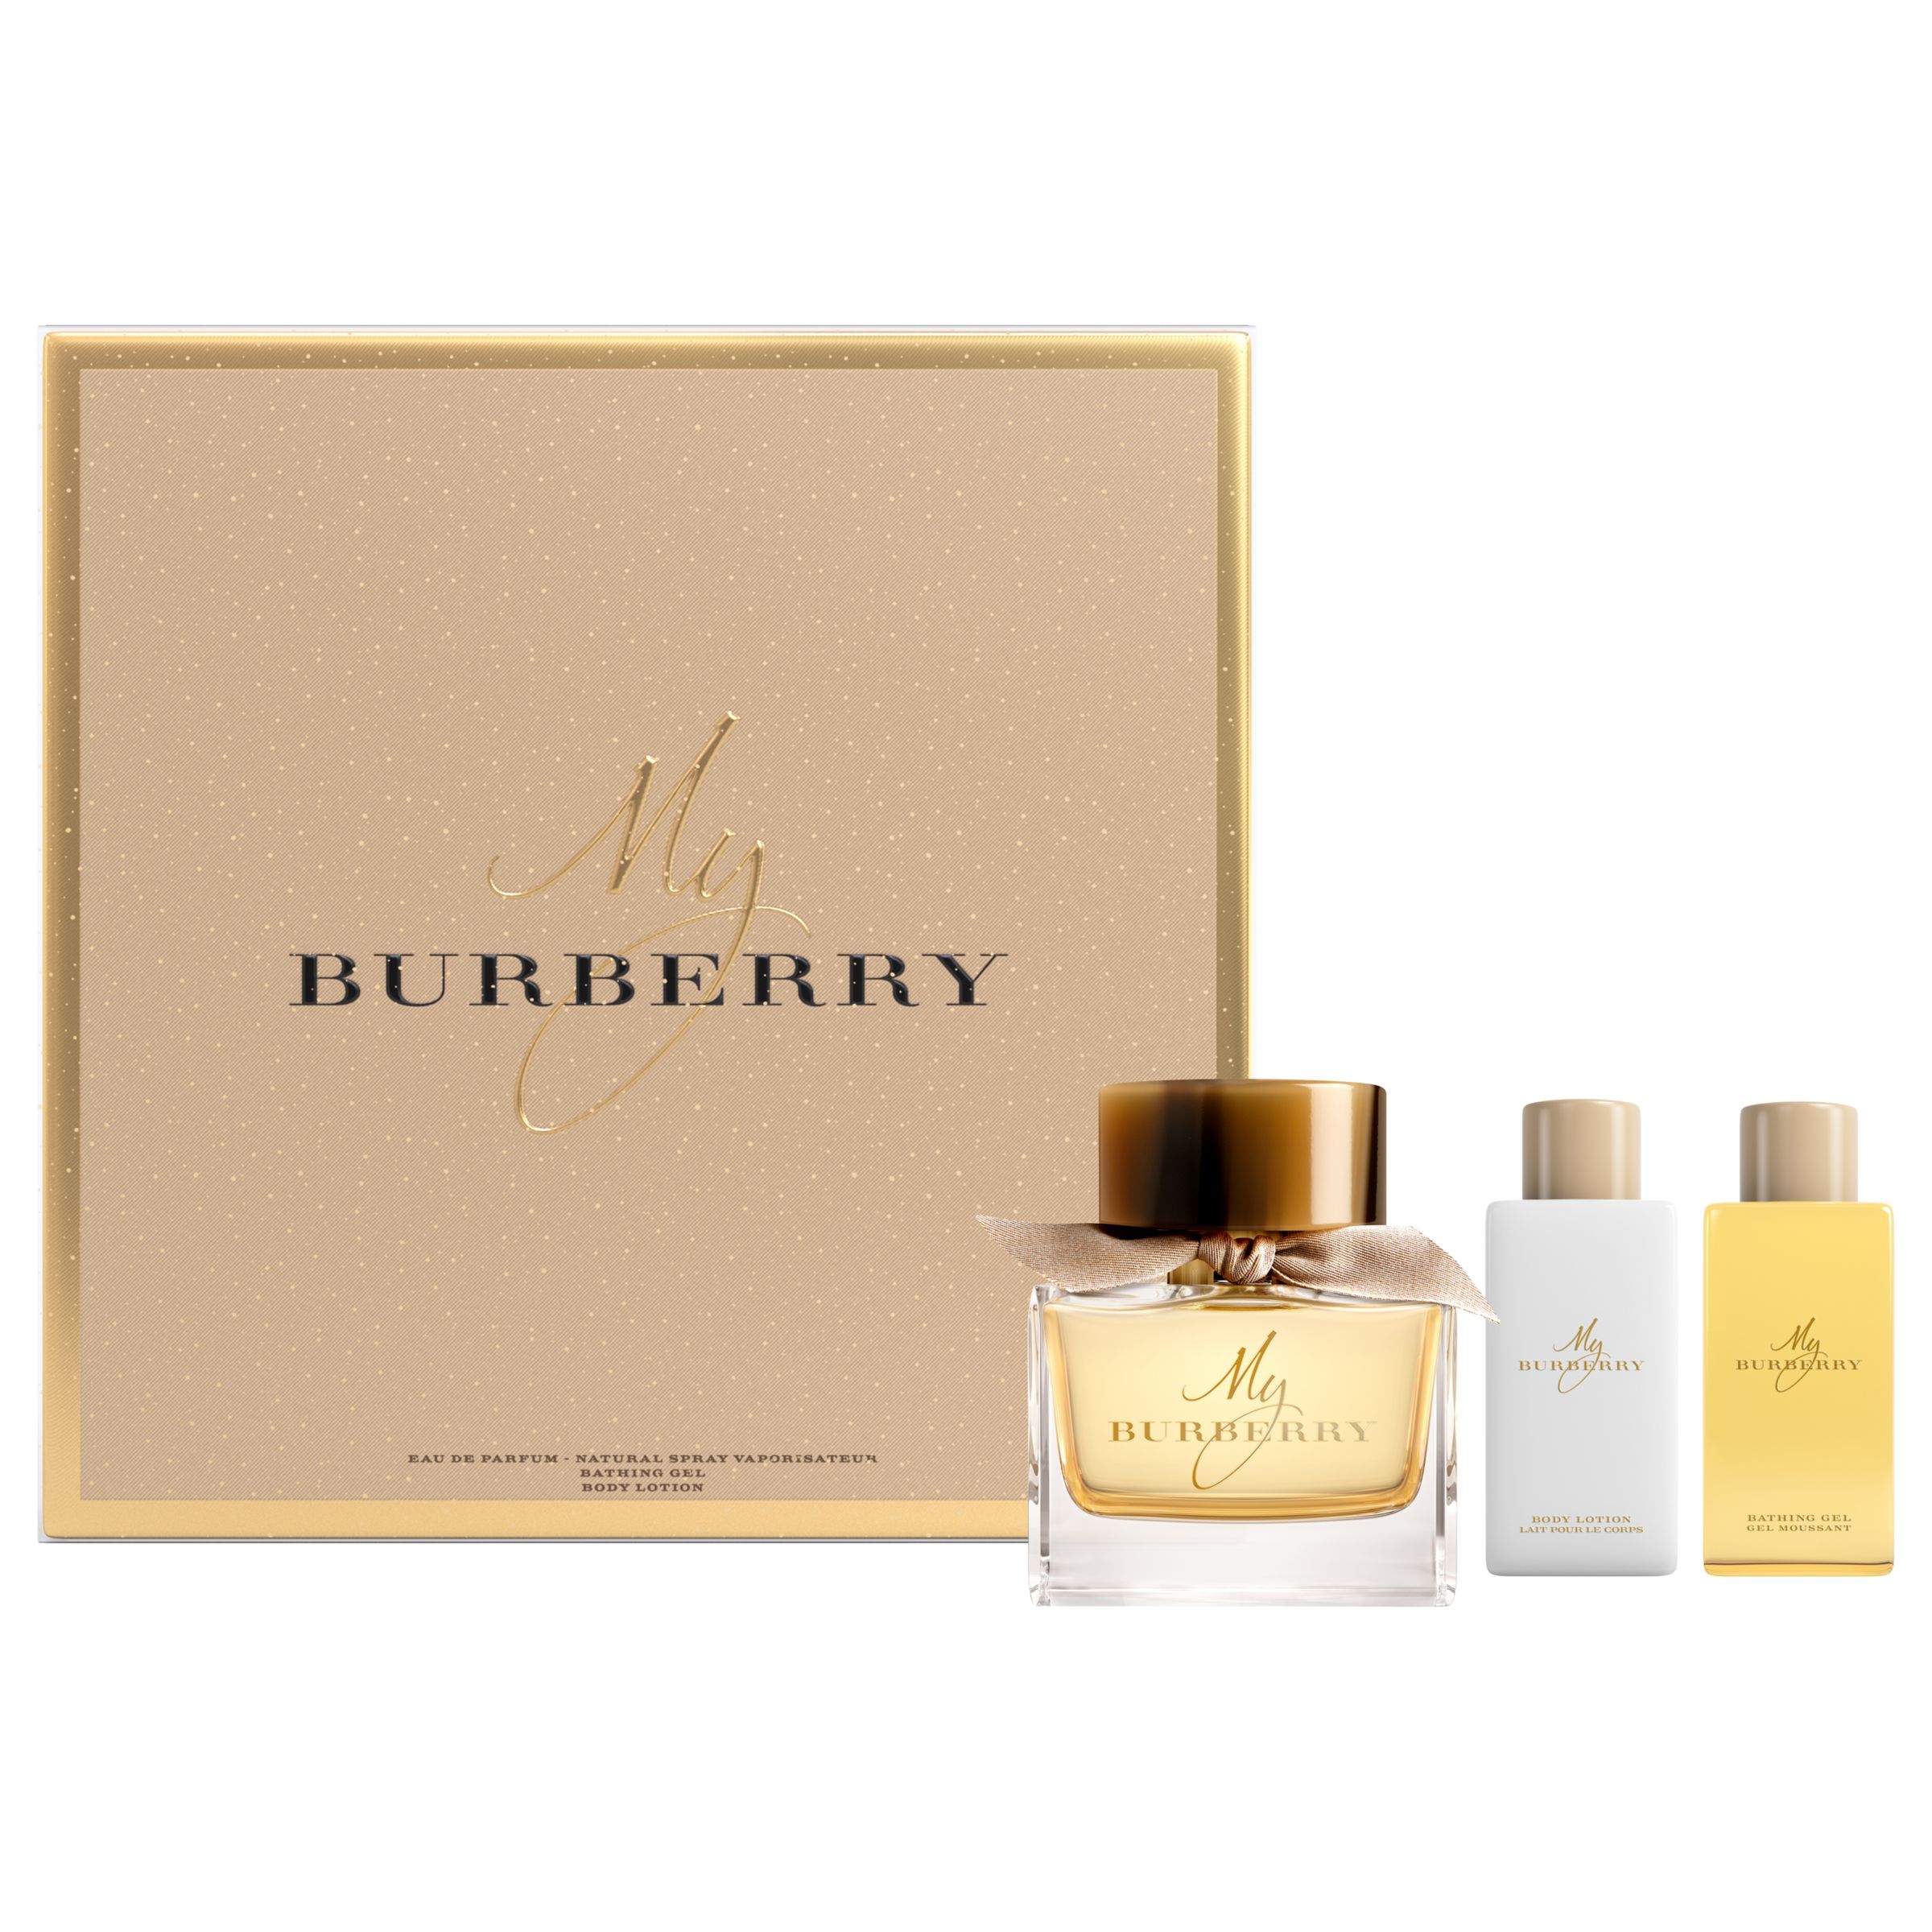 Burberry My Burberry 90ml Eau de Parfum Fragrance Gift Set Reviews